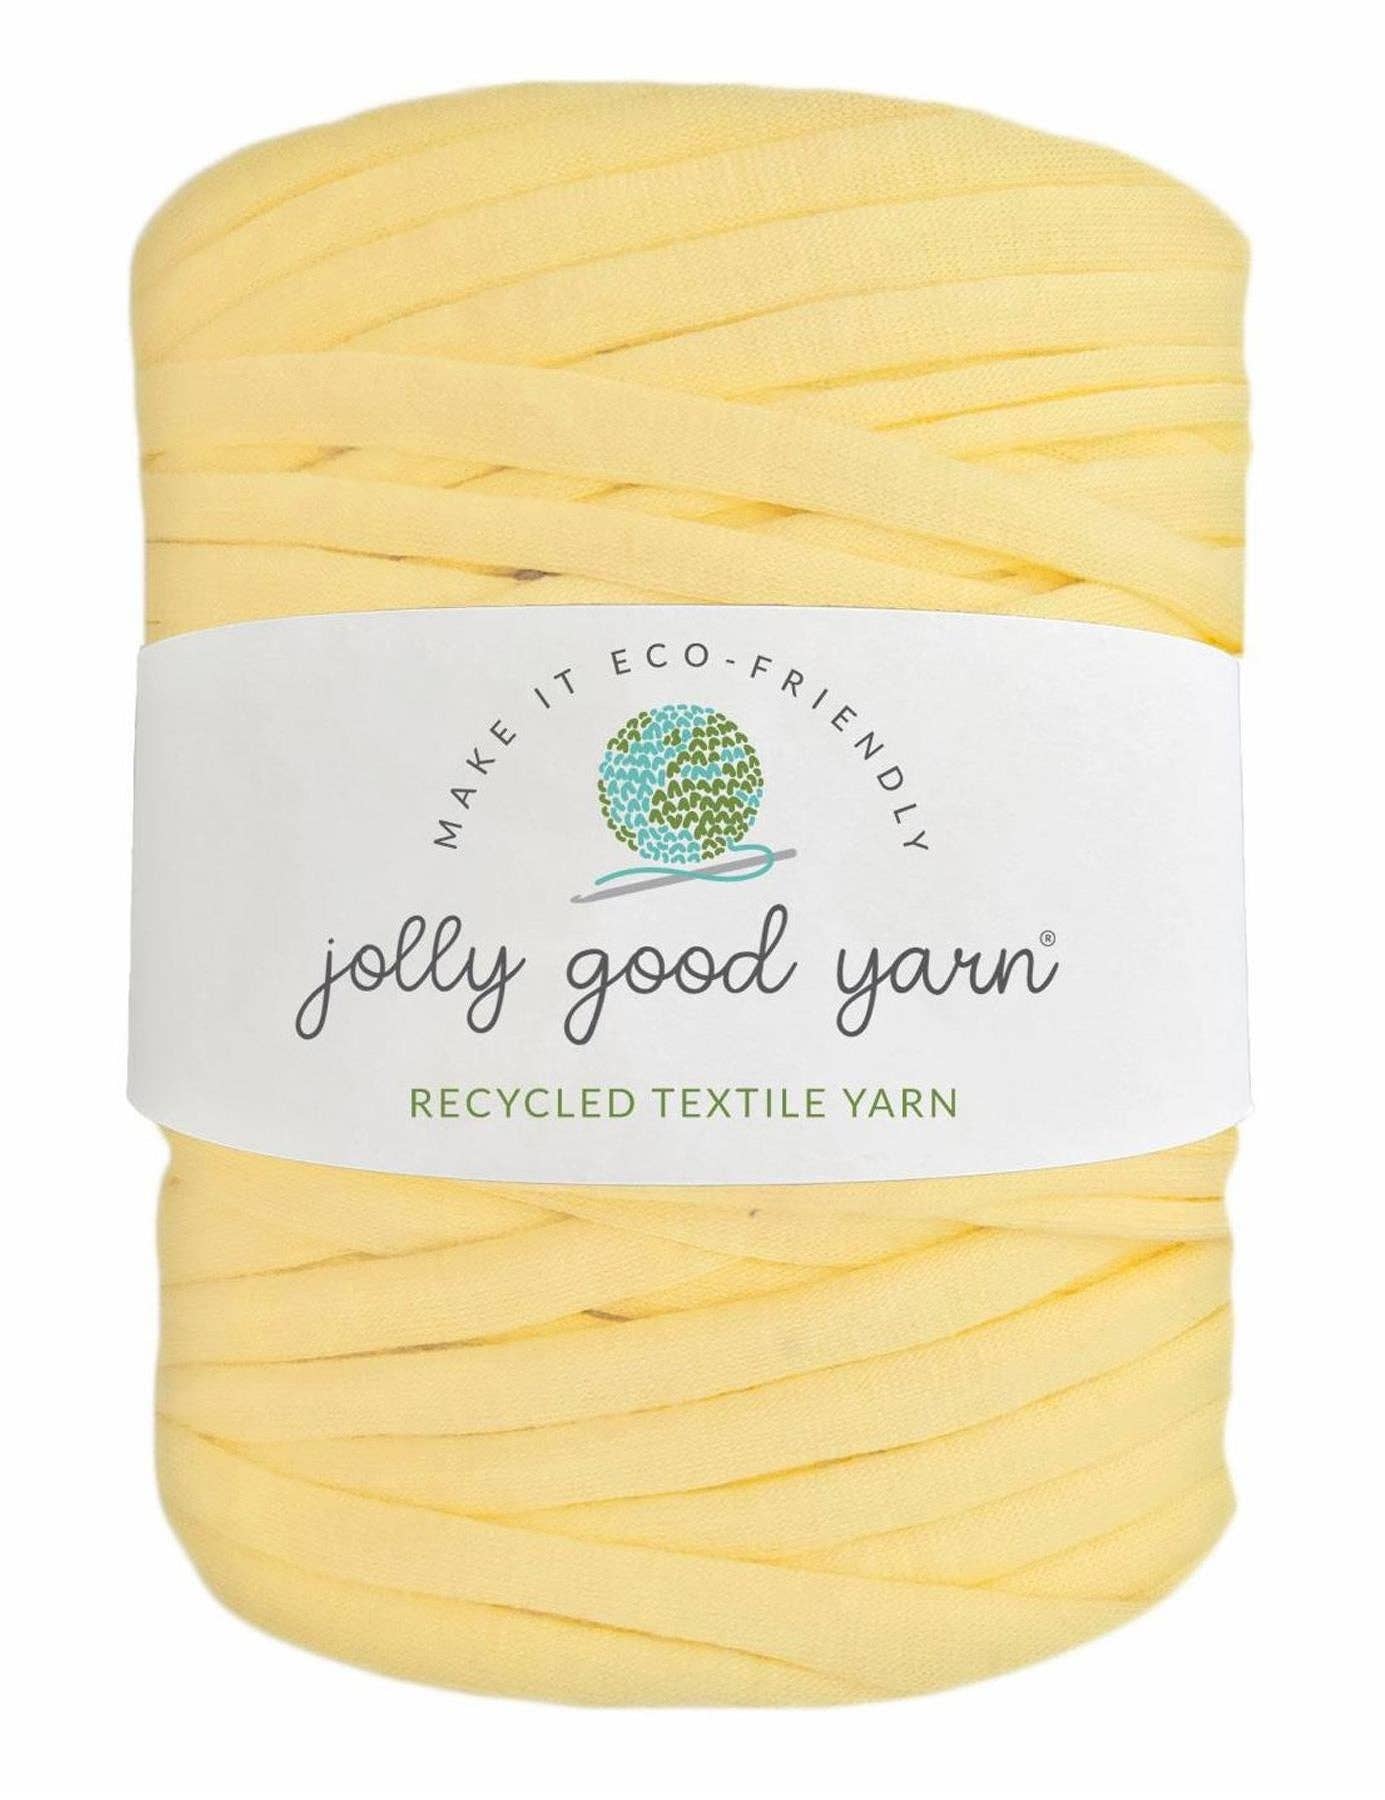 Jolly Good Yarn - T-shirt Yarn - 100-120m